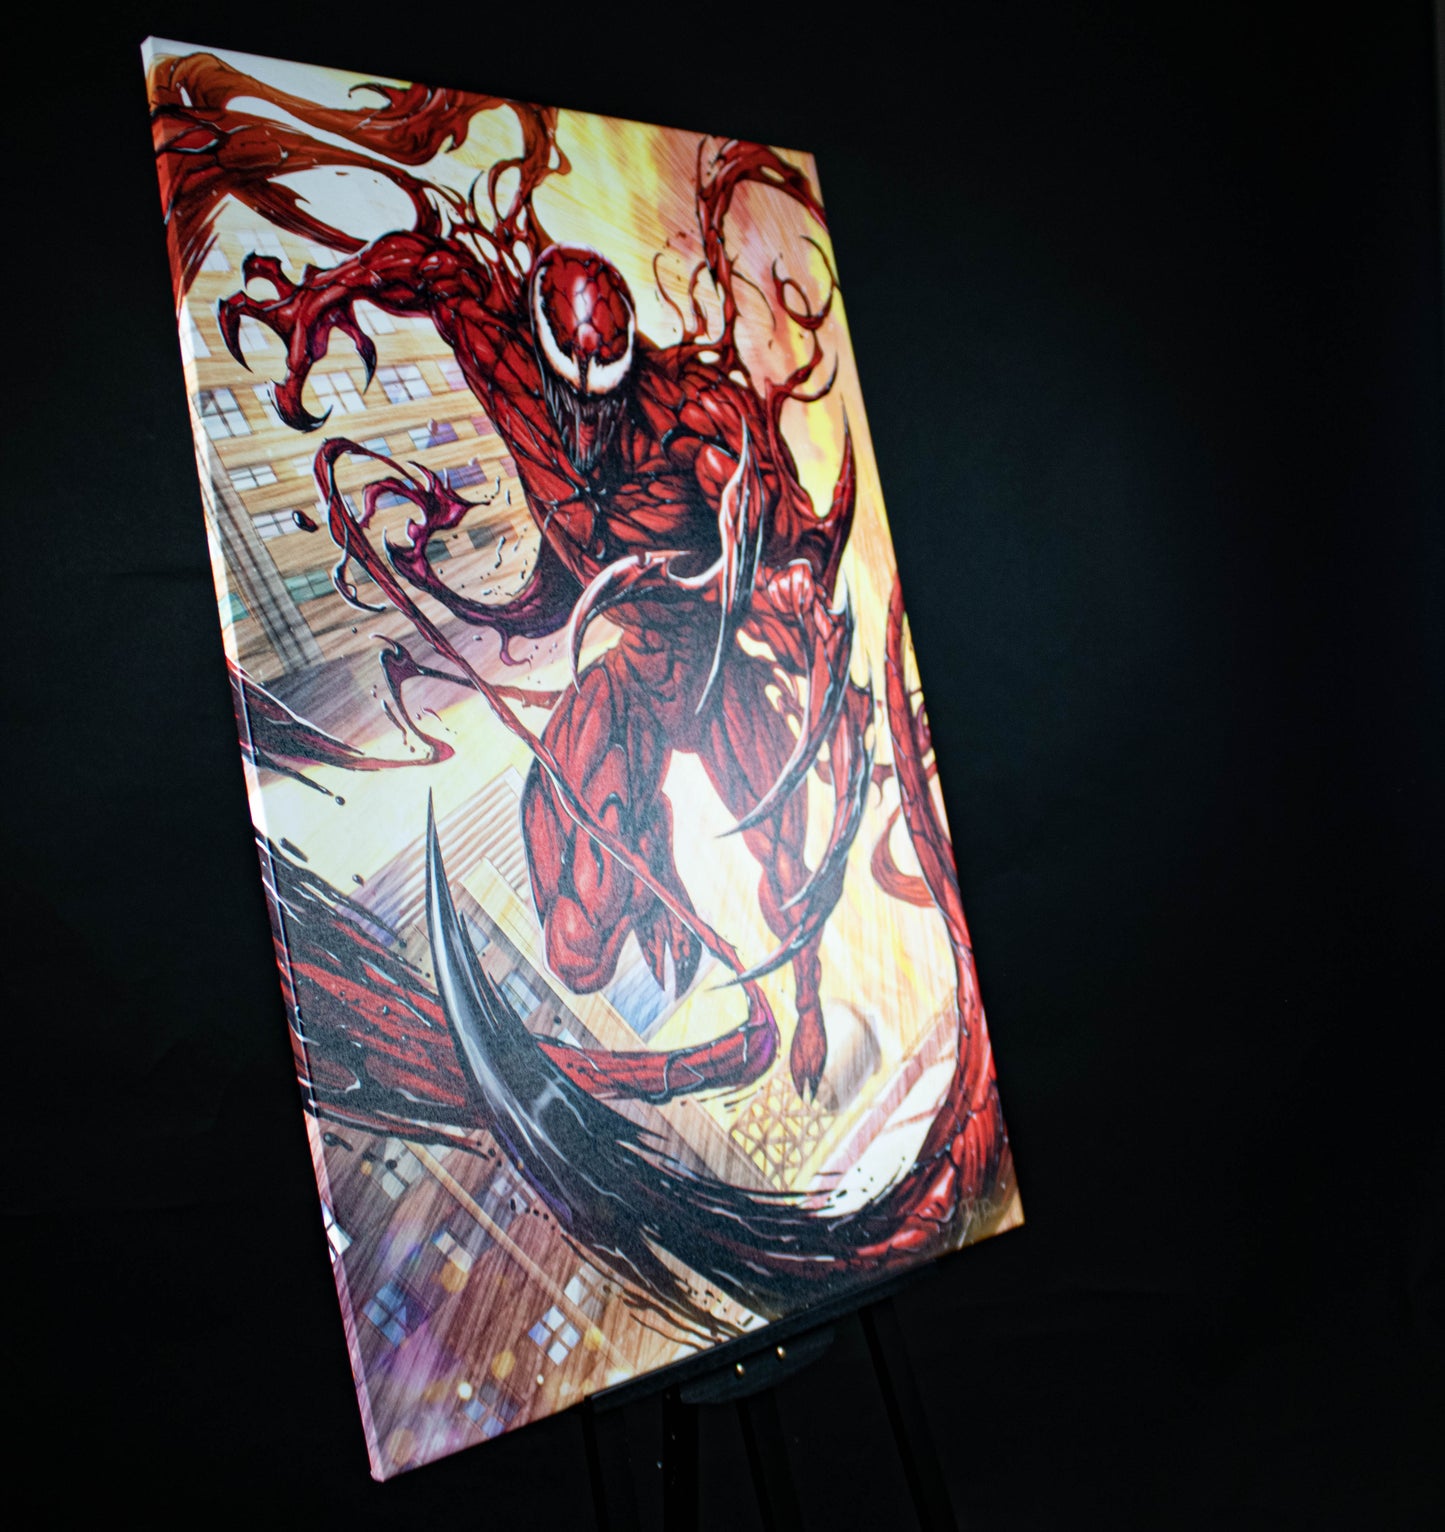 Carnage "Killer Symbiote" (Marvel) Premium Art Print